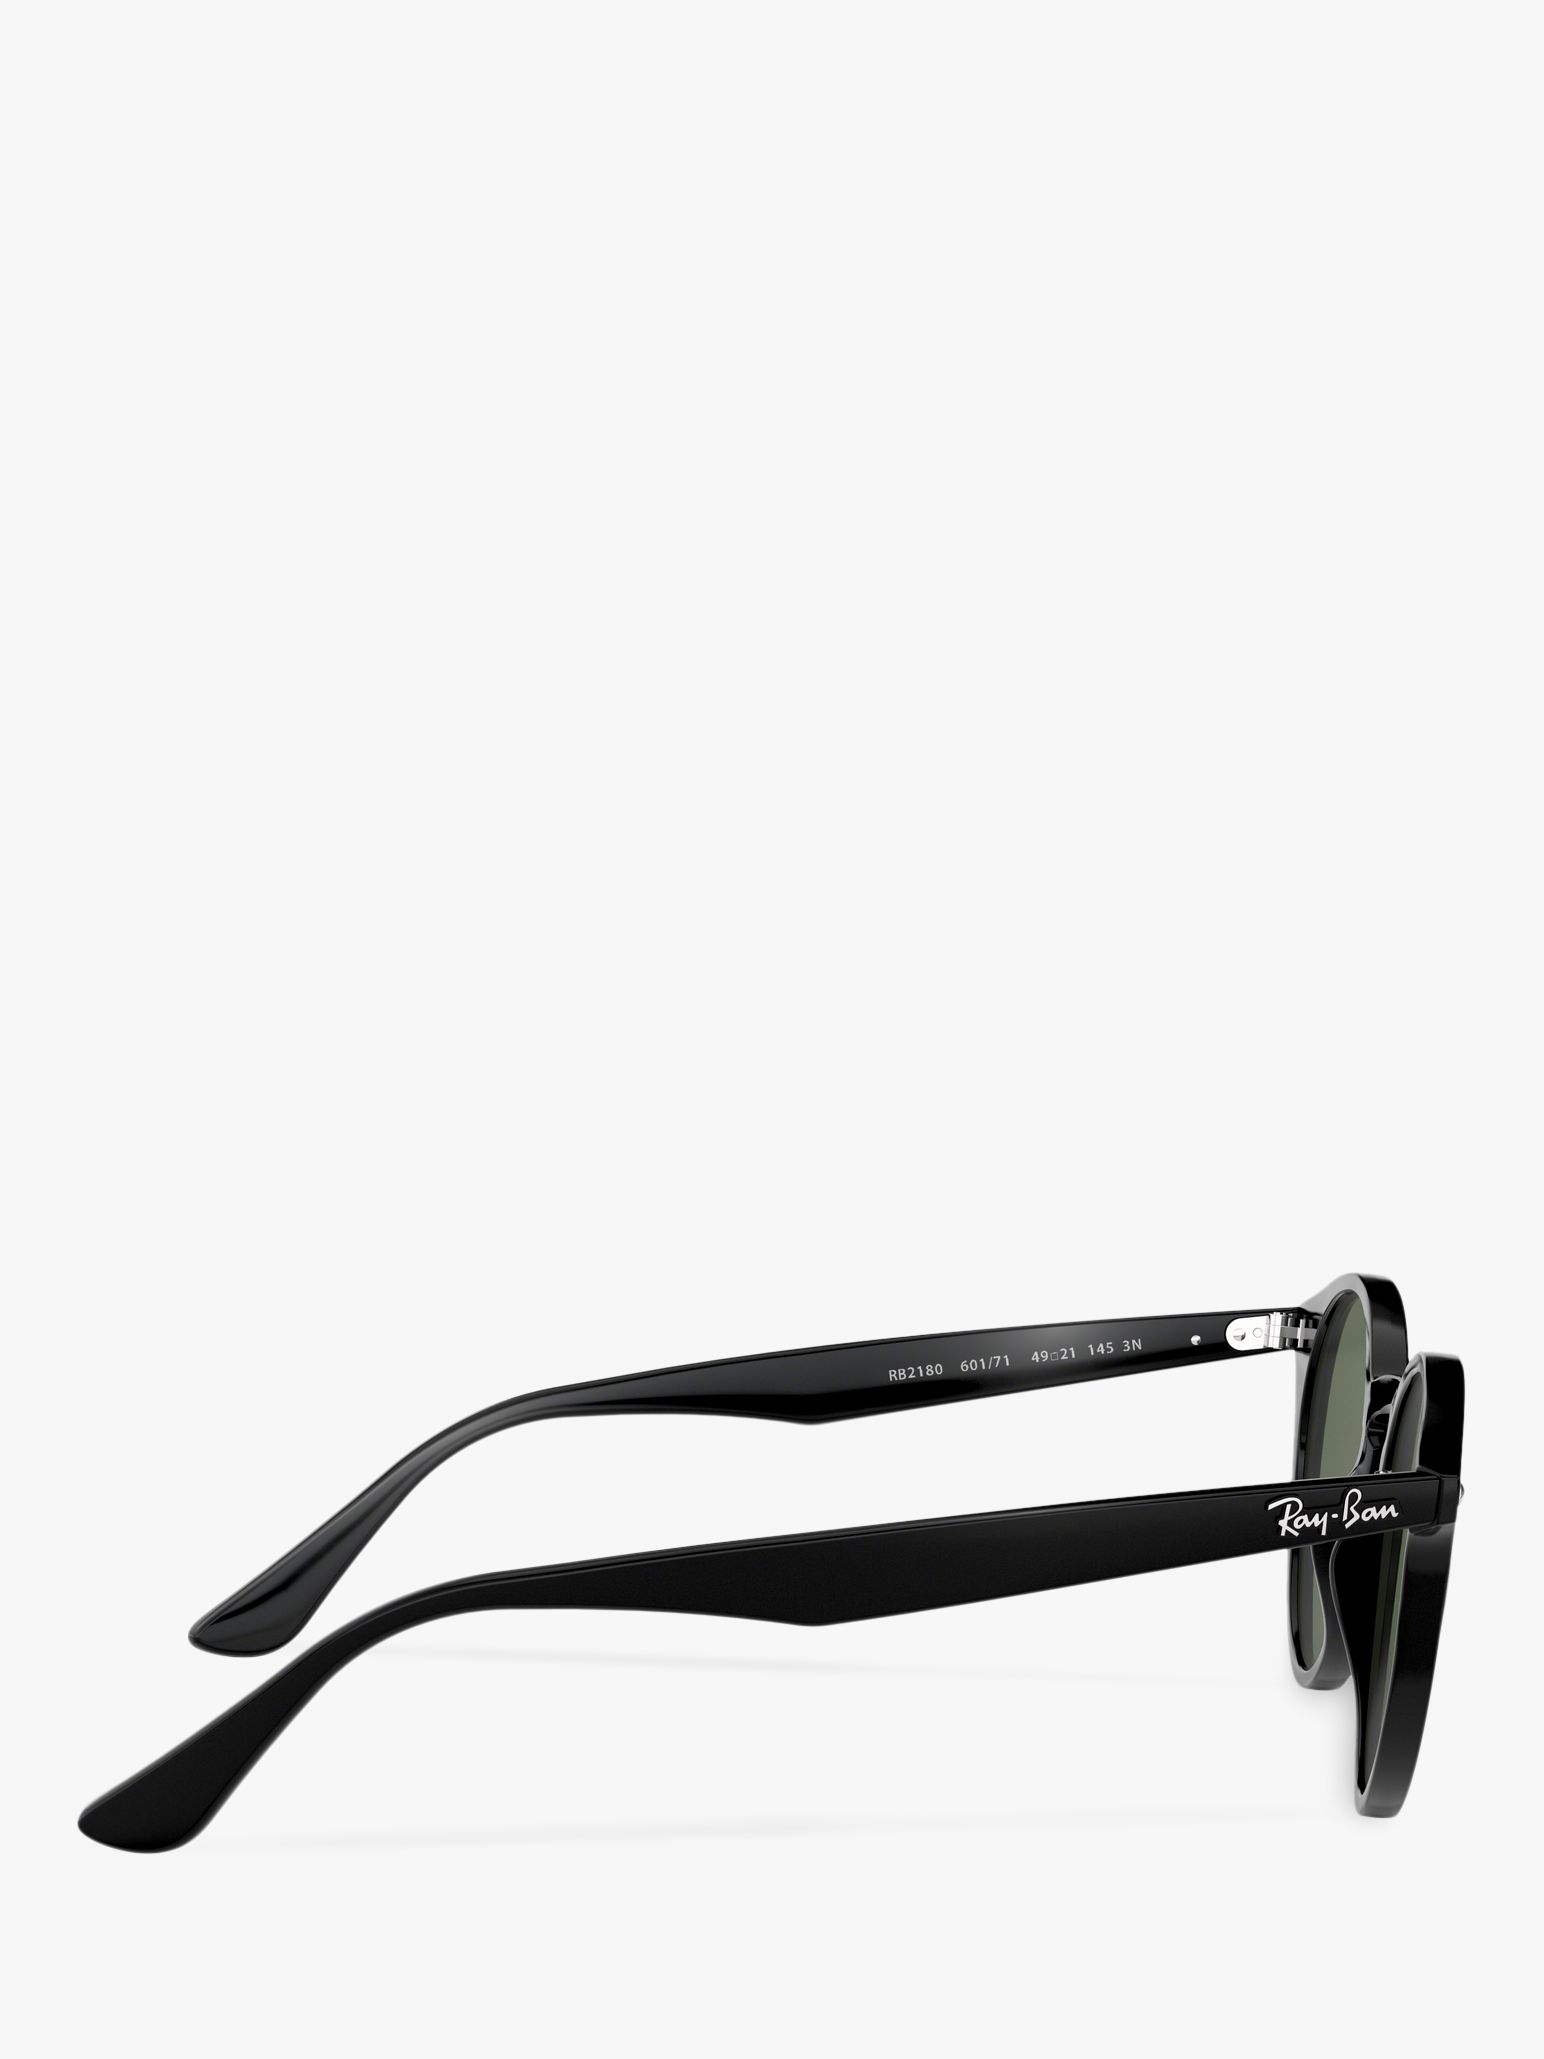 Ray-Ban RB2180 Men's Round Framed Sunglasses, Black/Grey Gradient